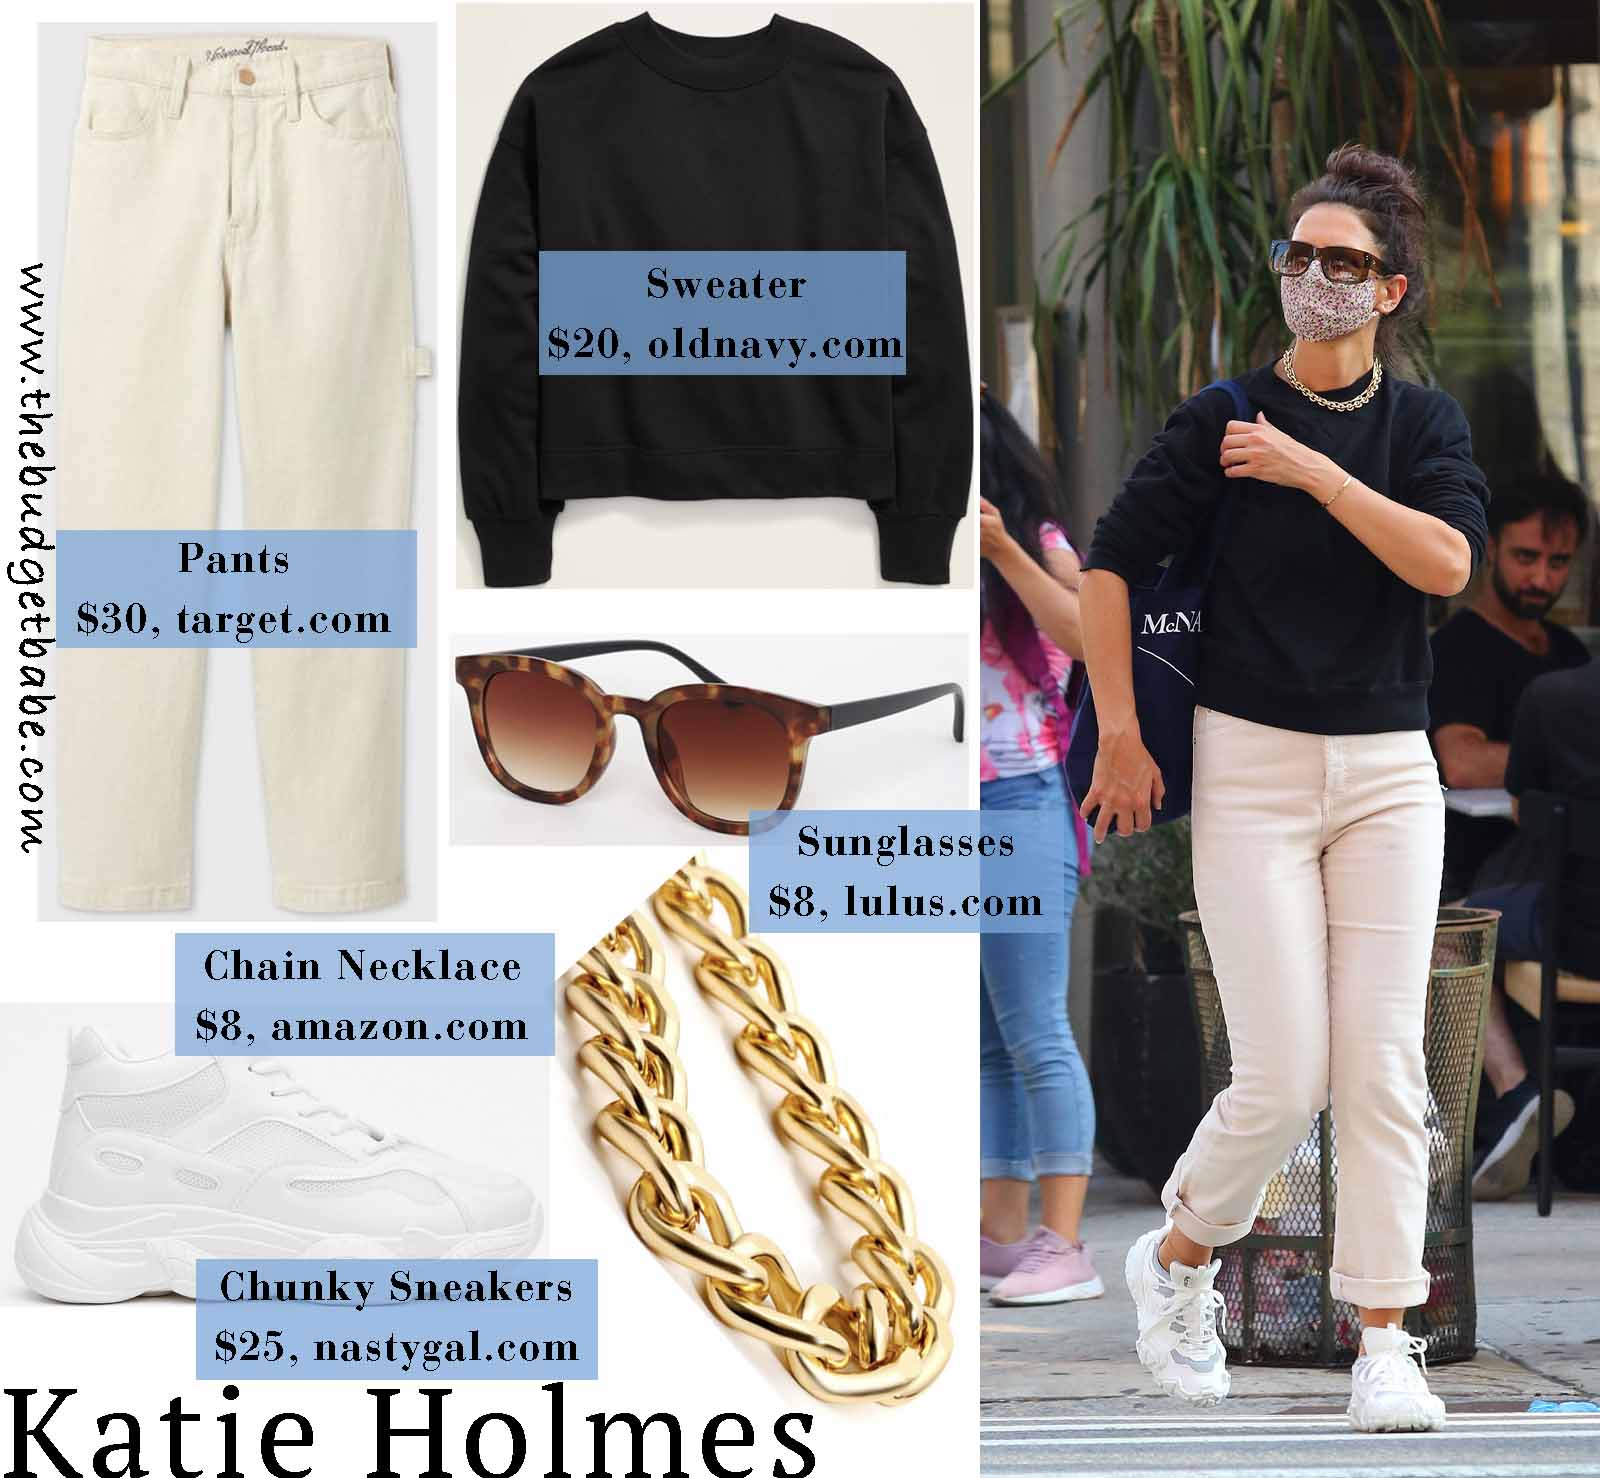 Katie Holmes styles Fall basics!